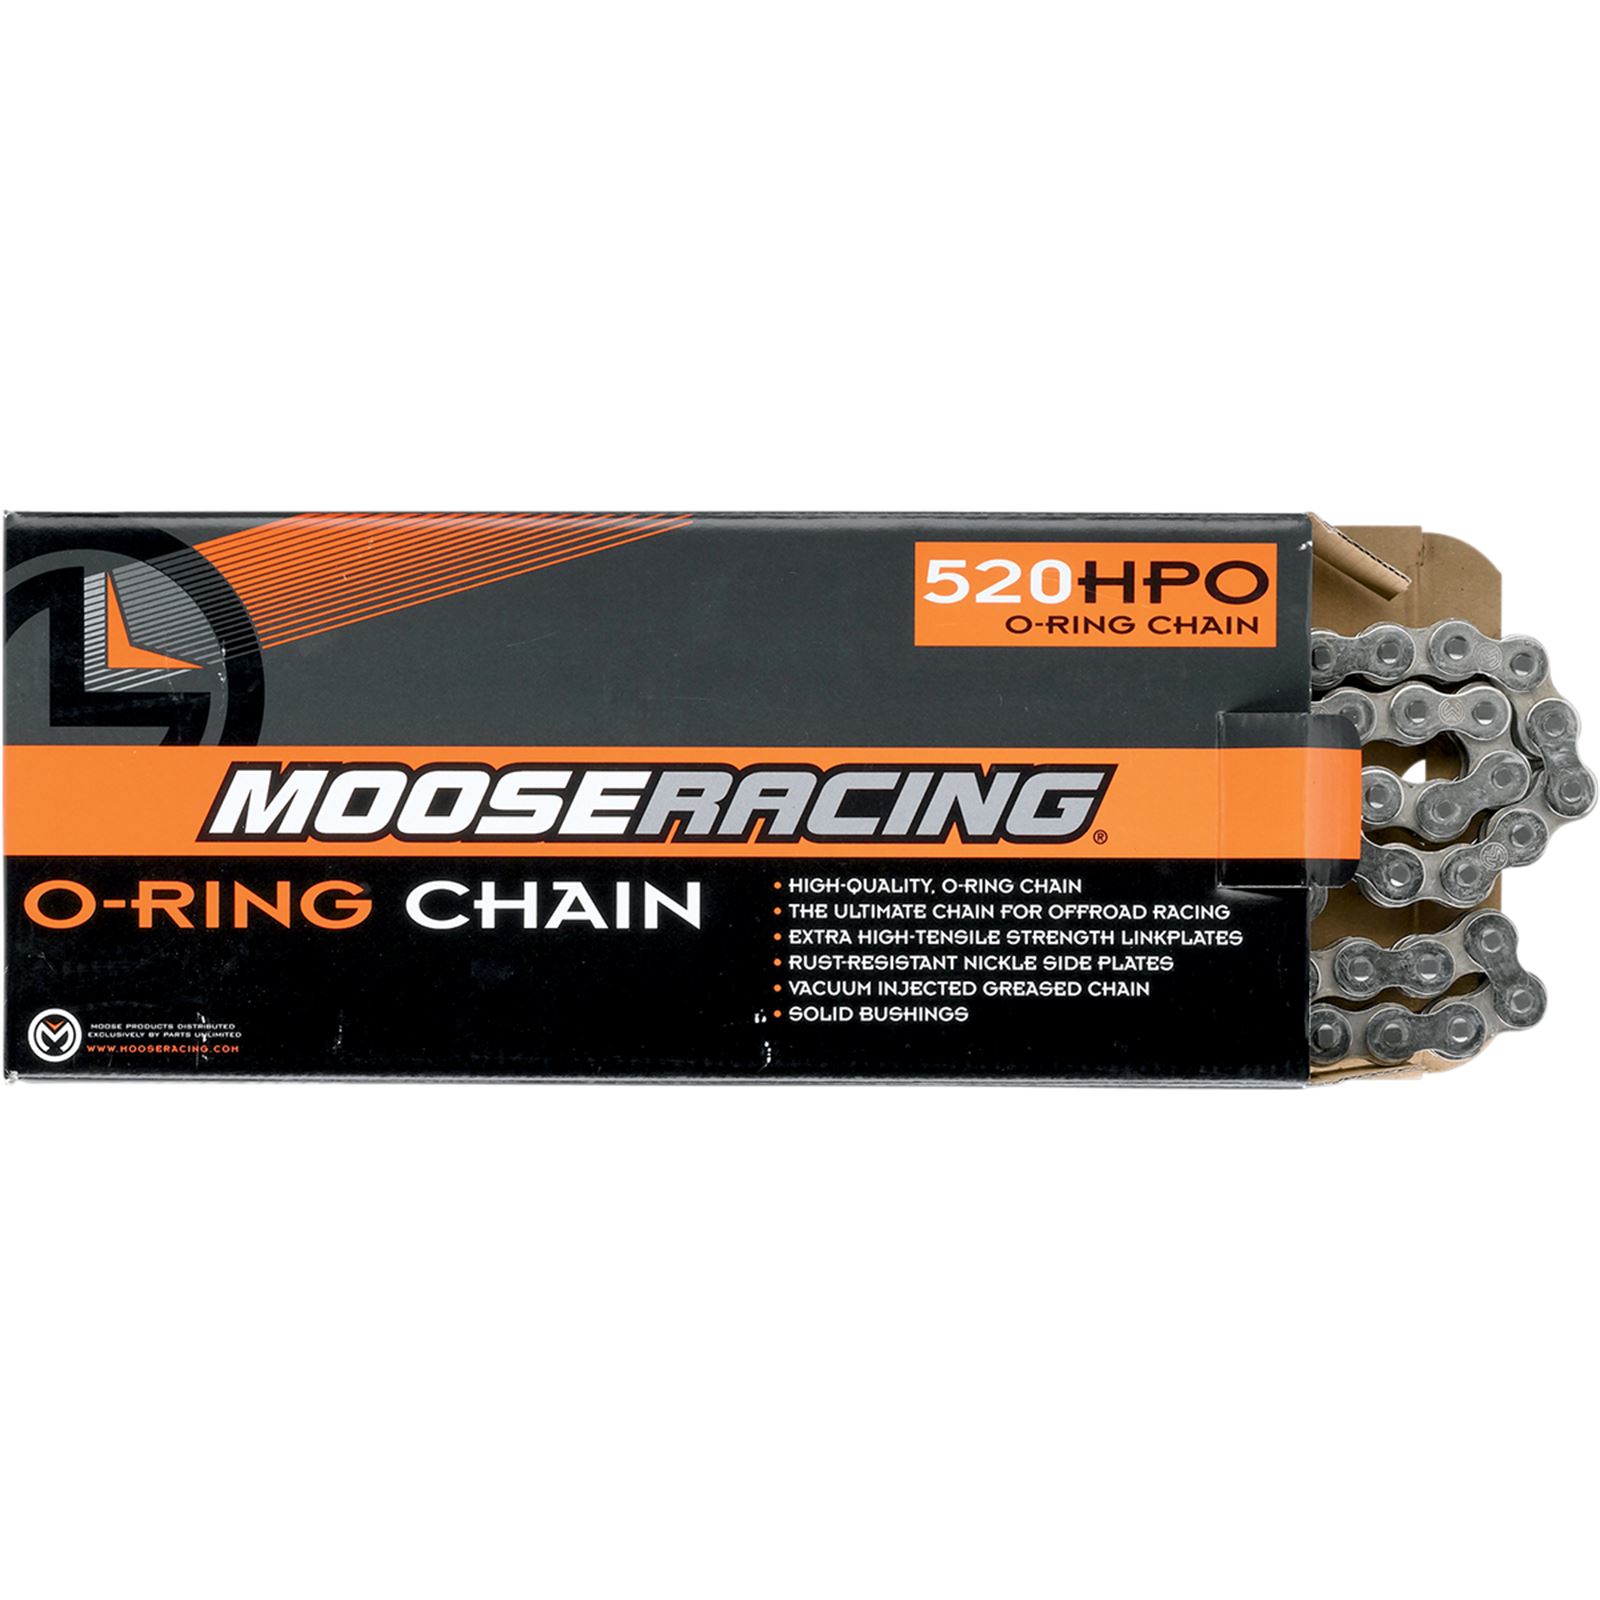 Moose Racing 520 HPO - O-Ring Chain - 86 Plates